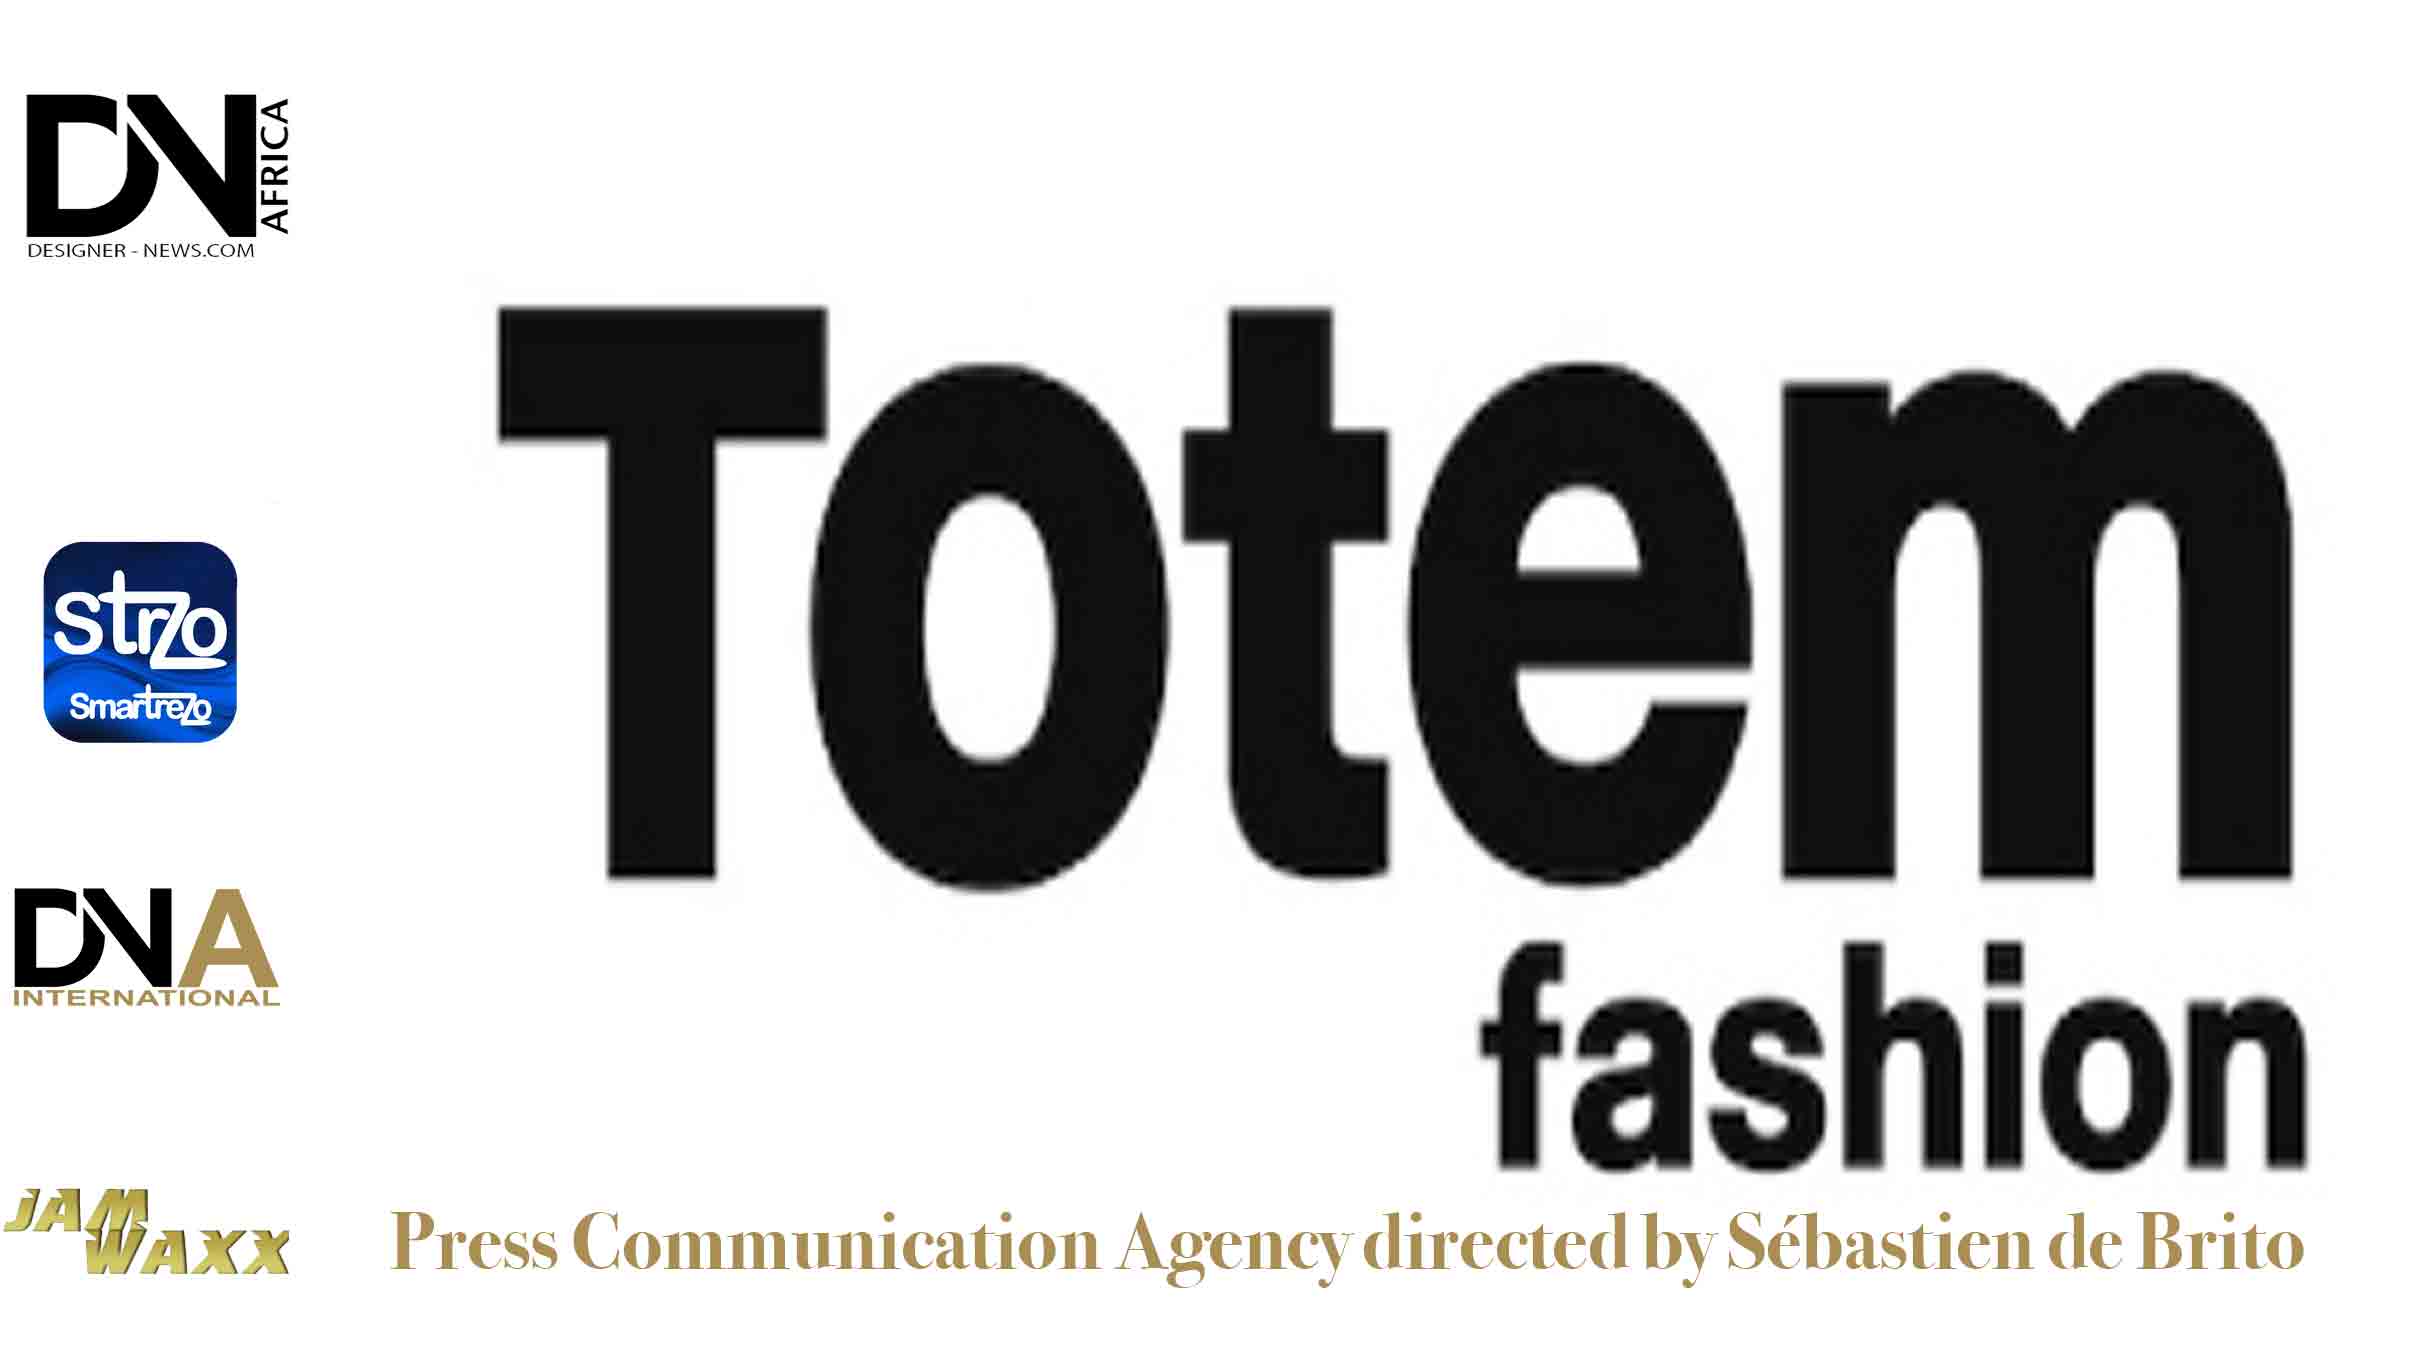 TOTEM-FASHION-Press-Communication-Agency-directed-by-Sébastien-de-Brito-DN-A-INTERNATIONAL-MEDIA-PARTNER-